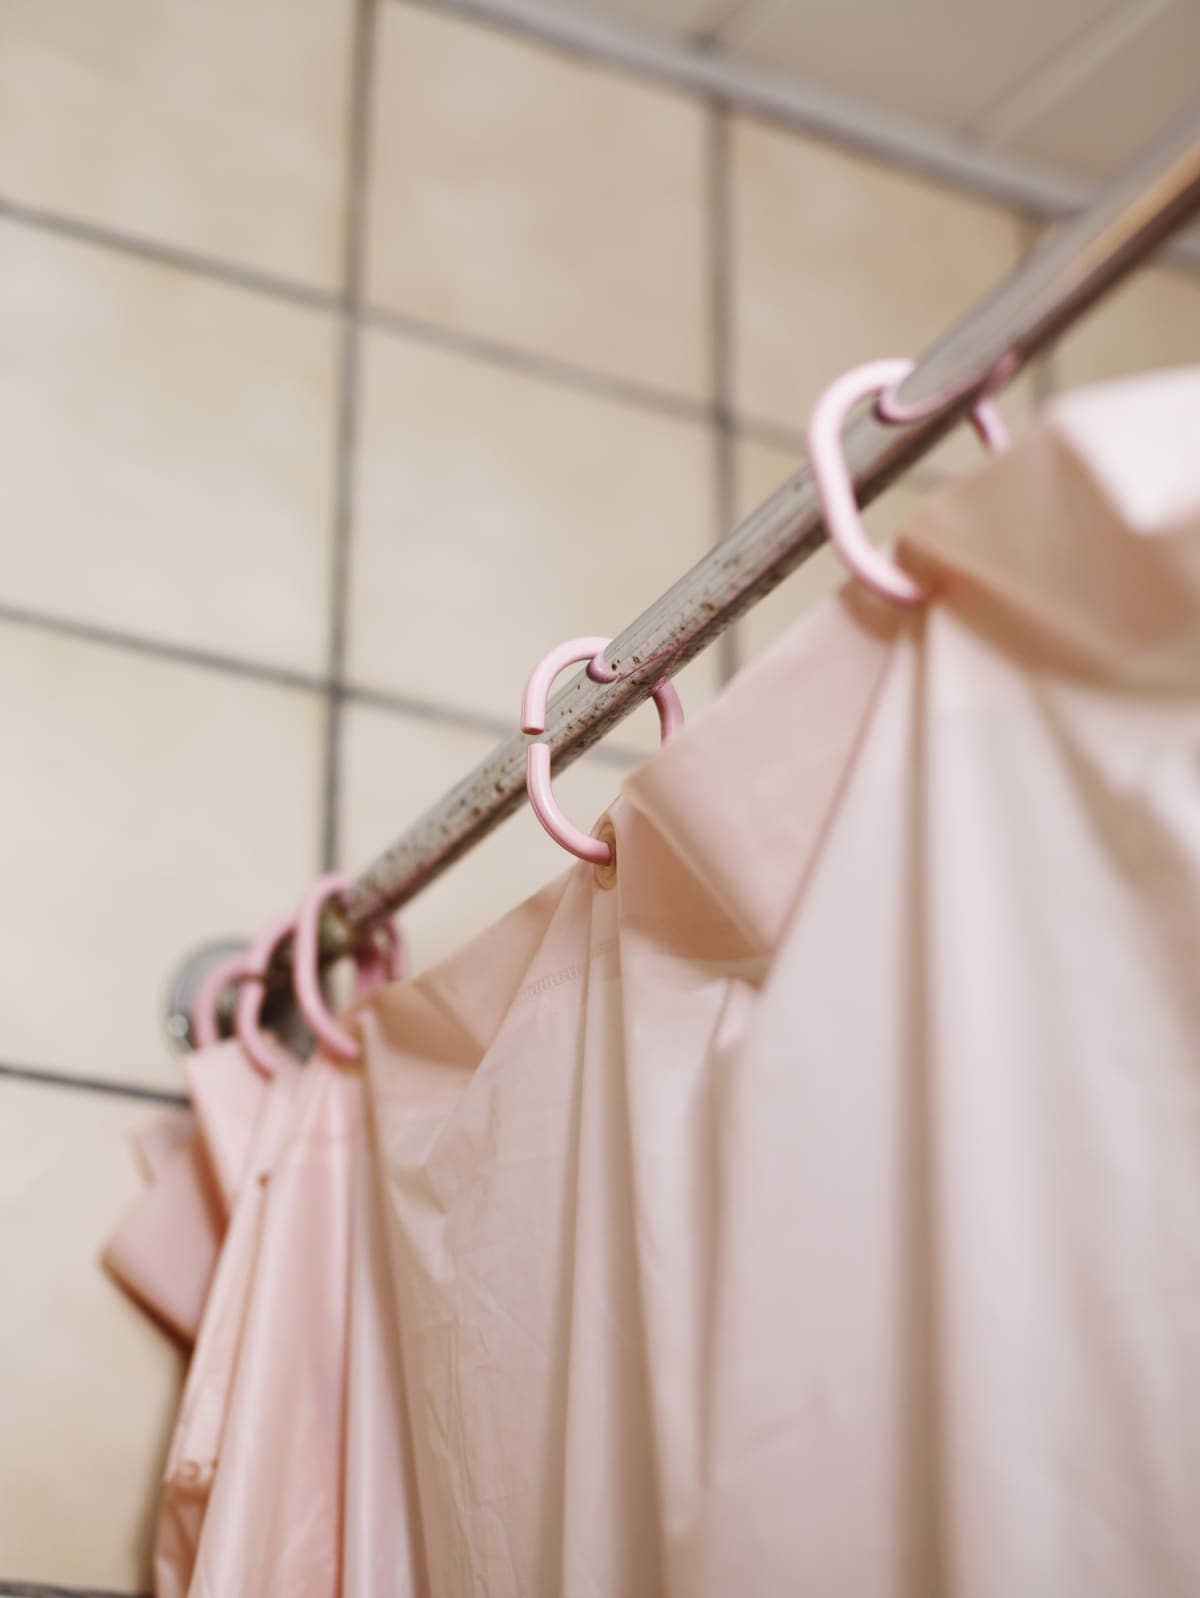 A rusty shower curtain rod